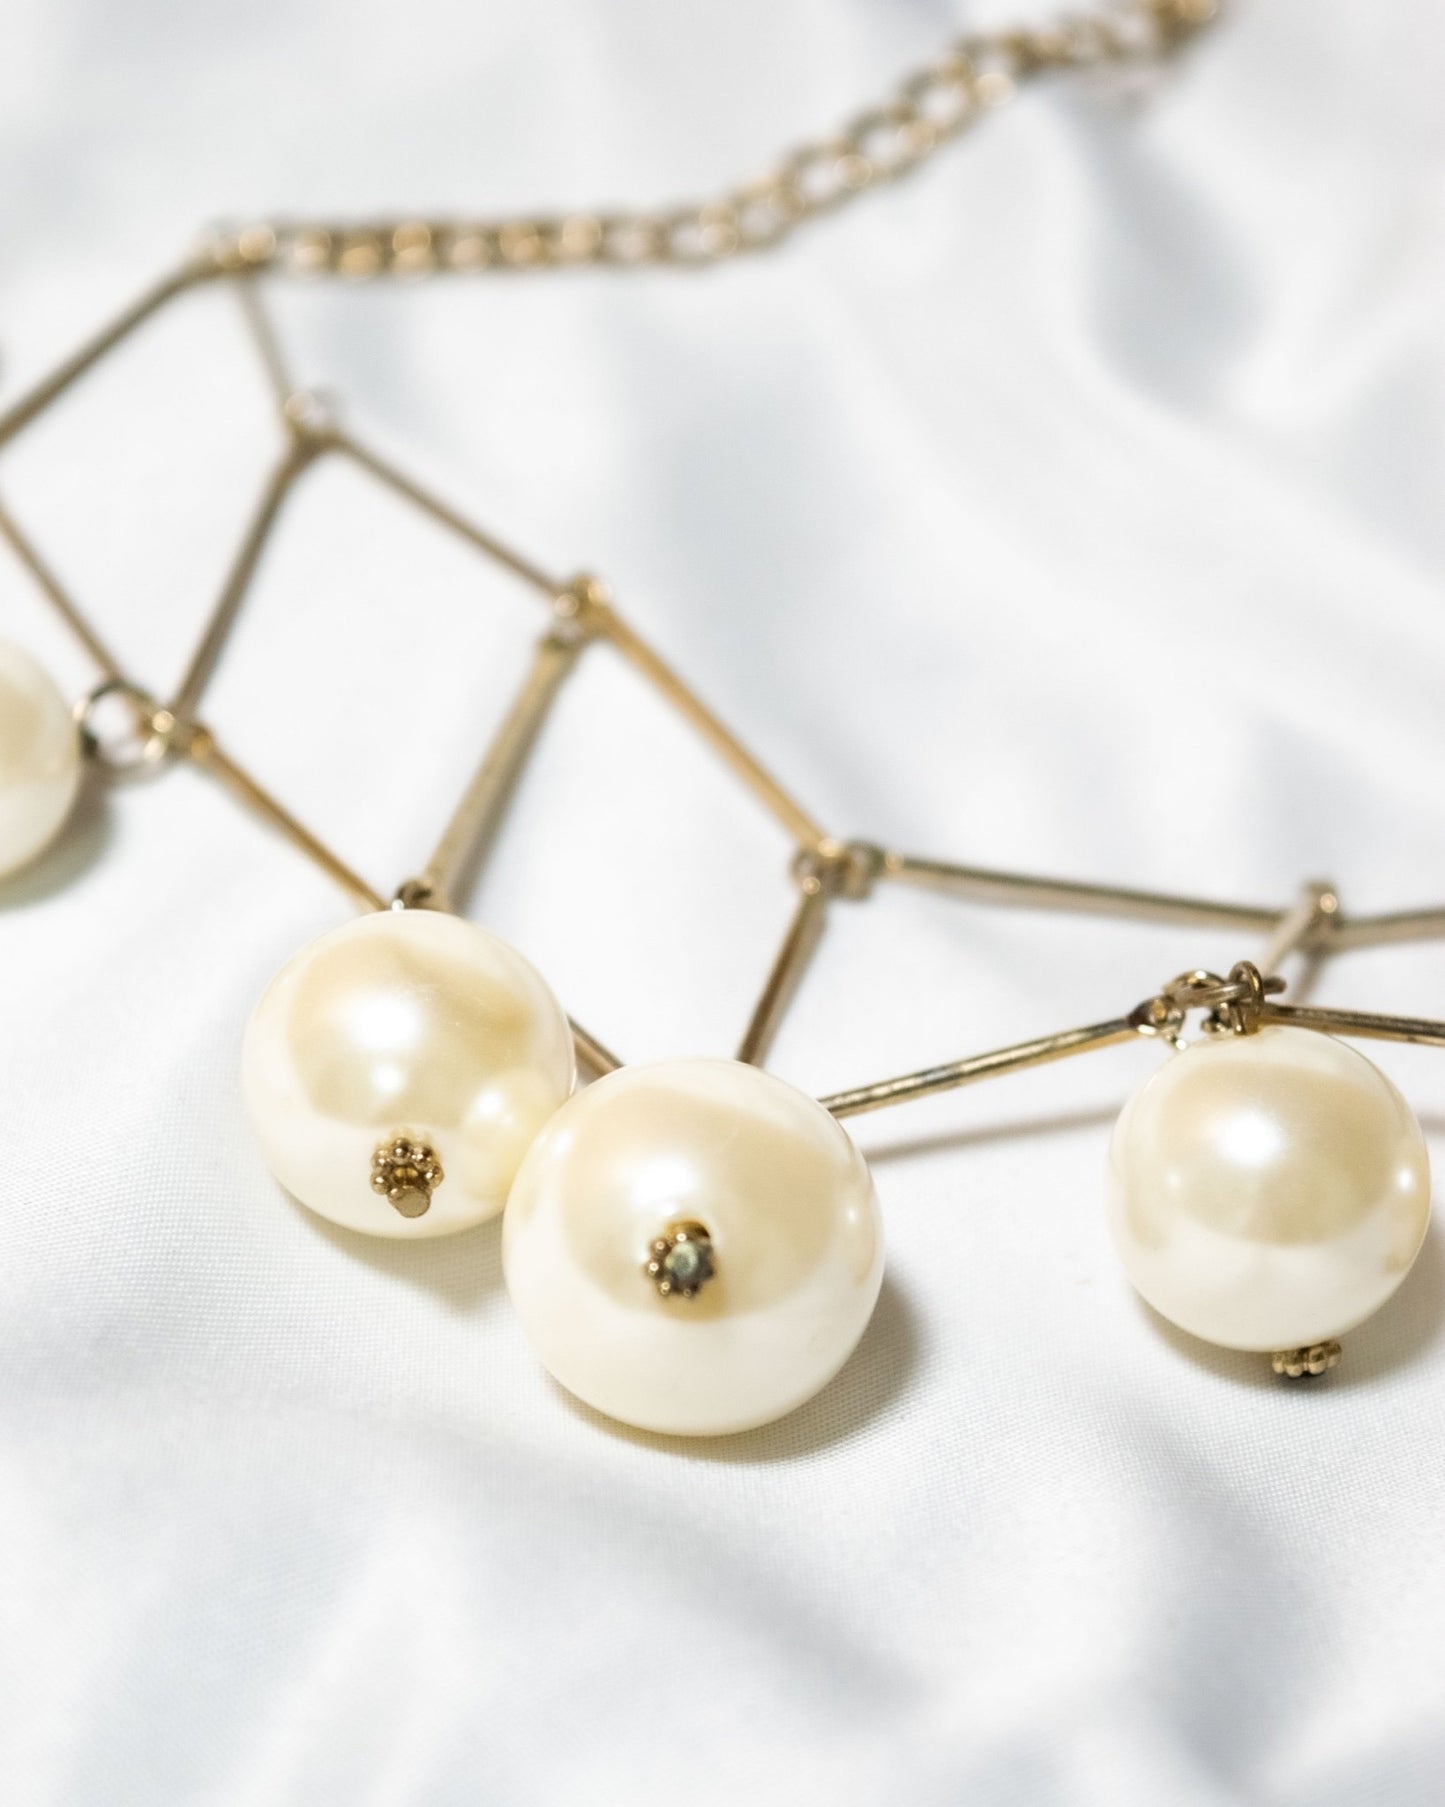 White Big Perls necklace